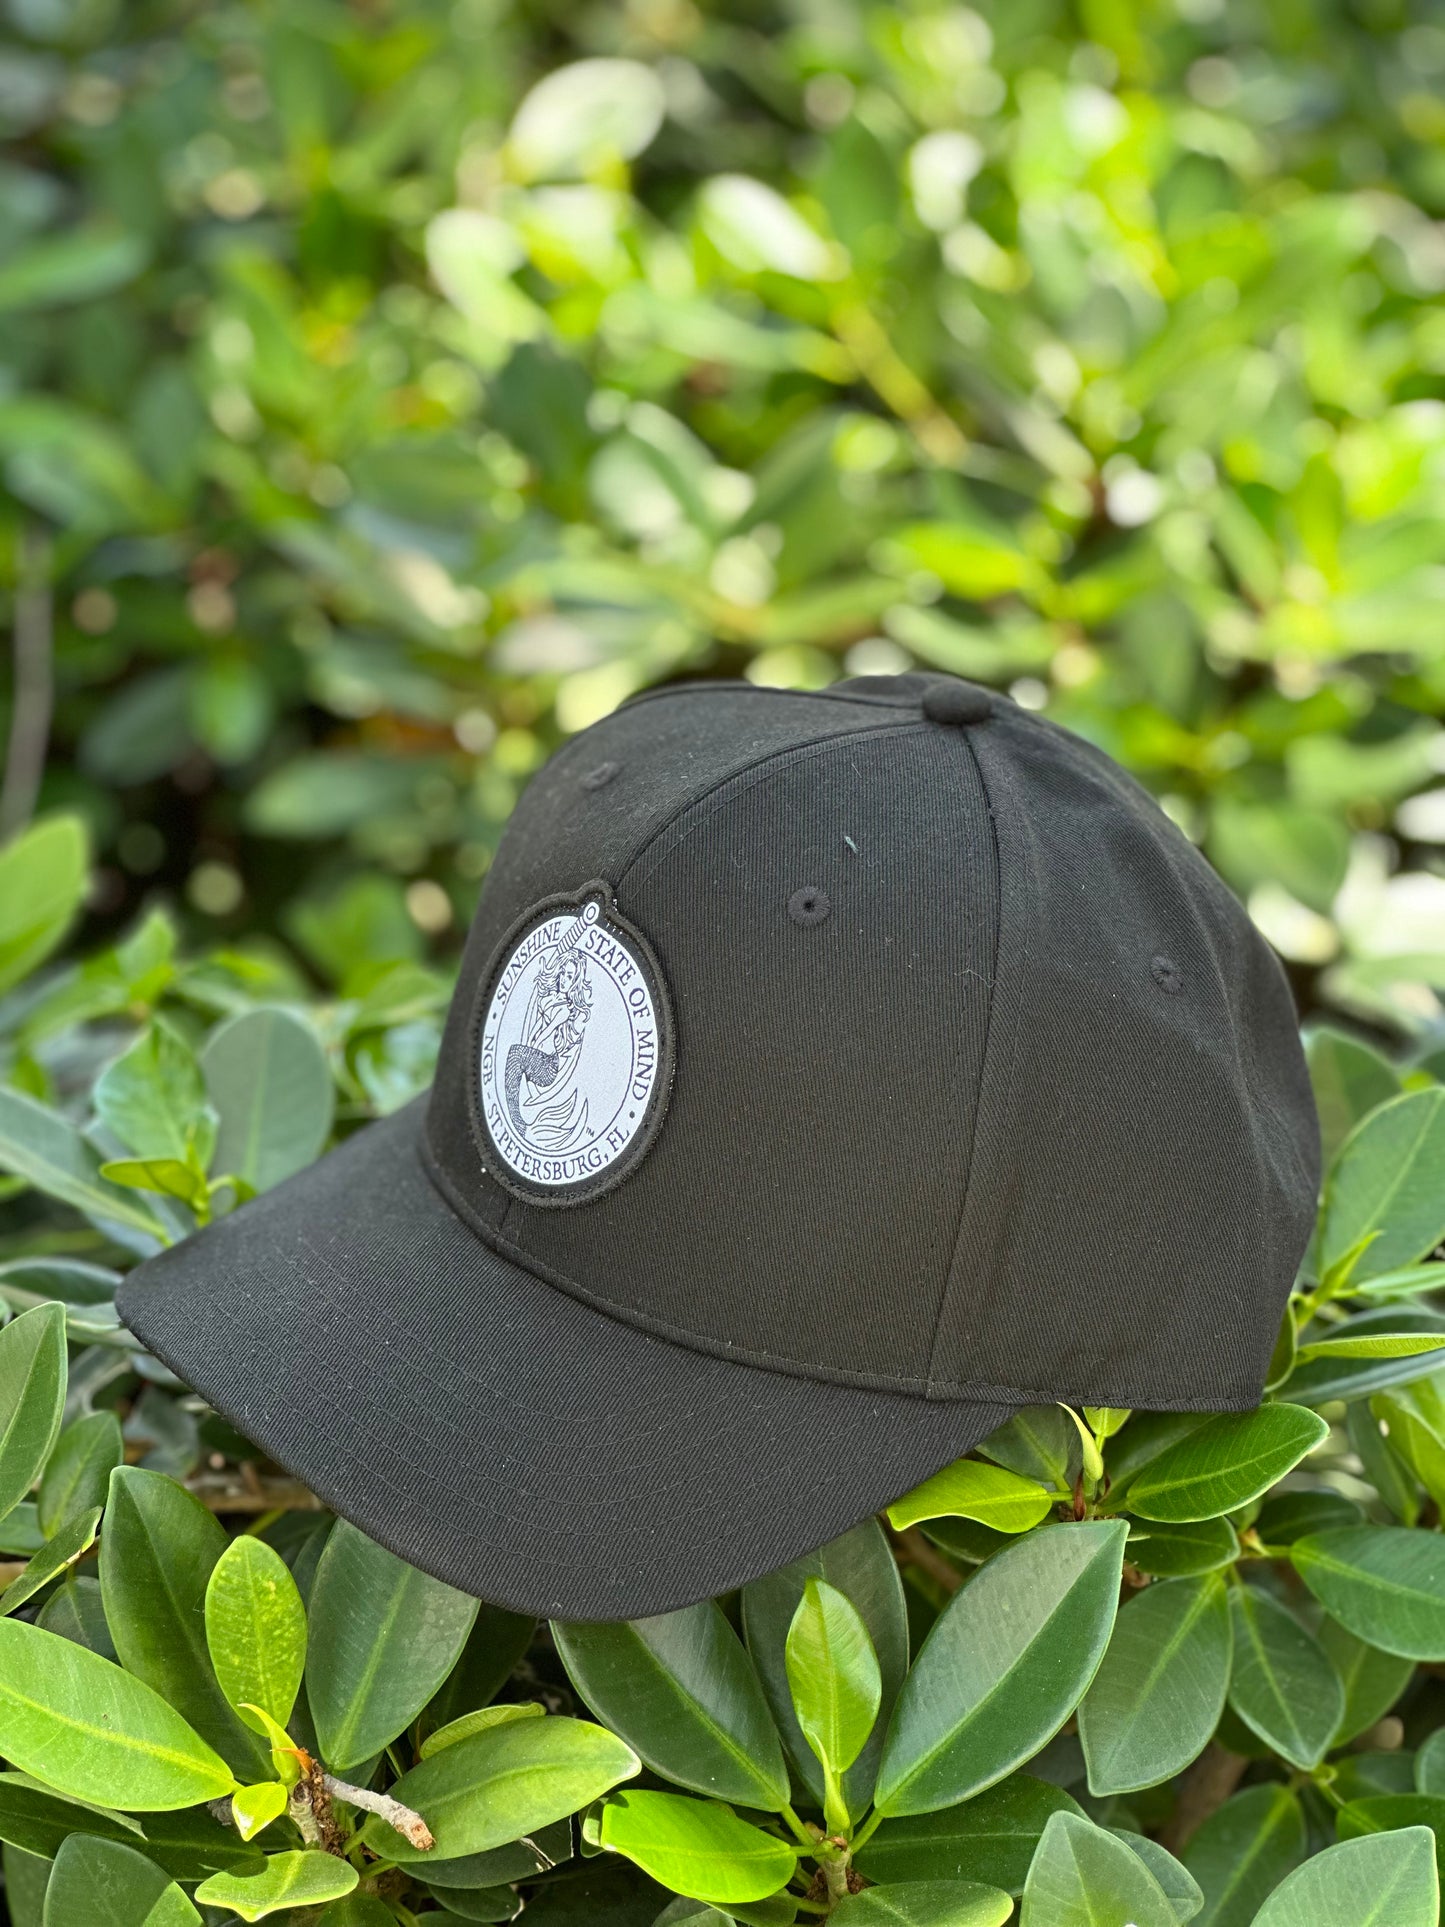 Snap-Back Cotton Twill Hat - Black - Black/White Kaia on FL Seal Patch